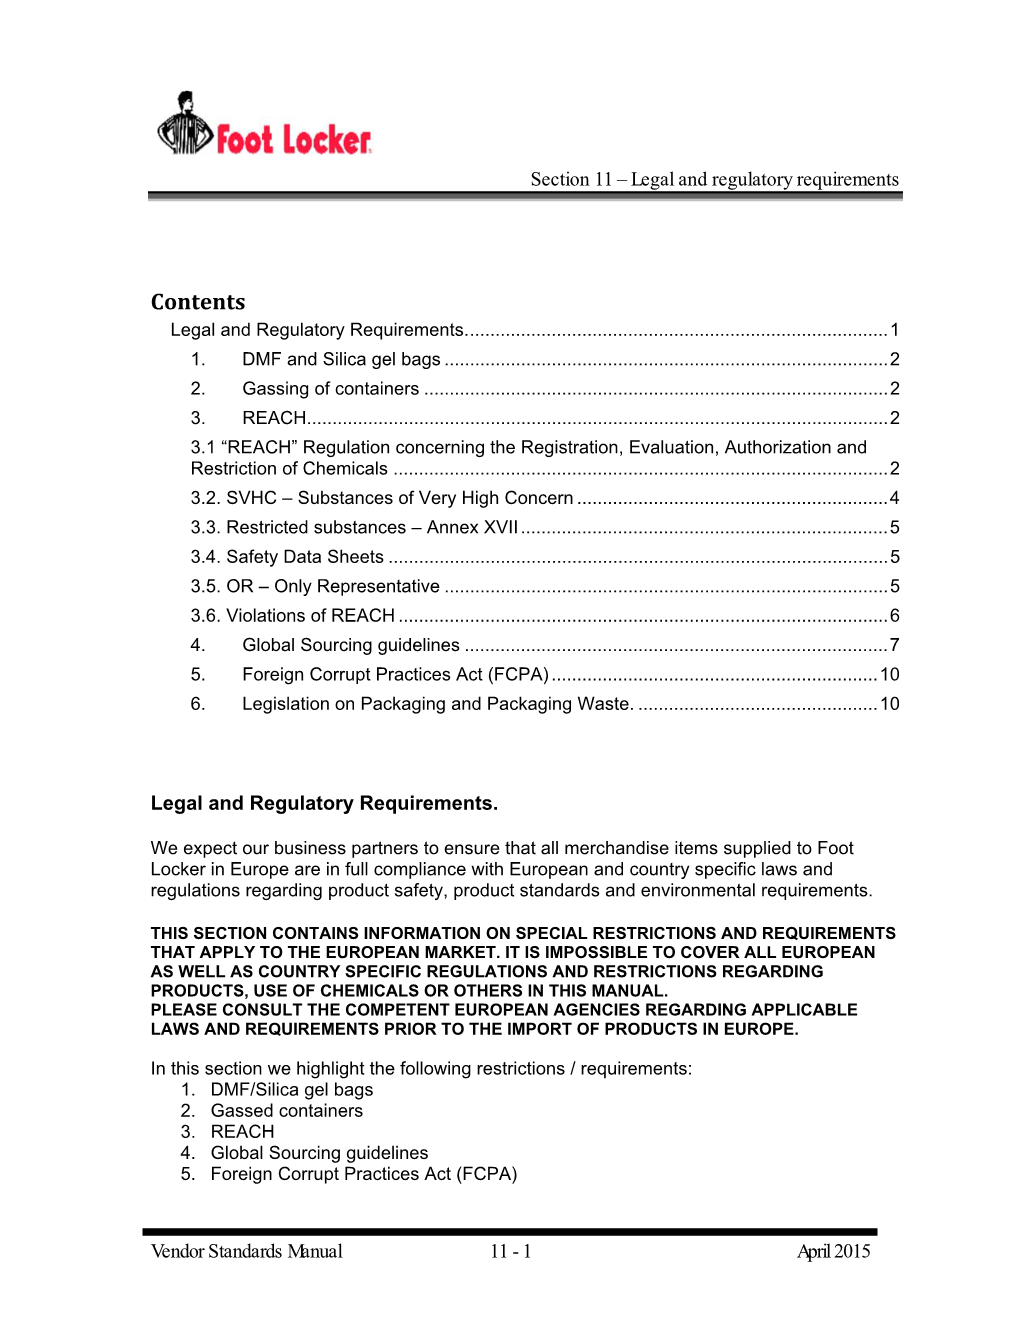 Legal and Regulatory Requirements Vendor Standards Manual 11